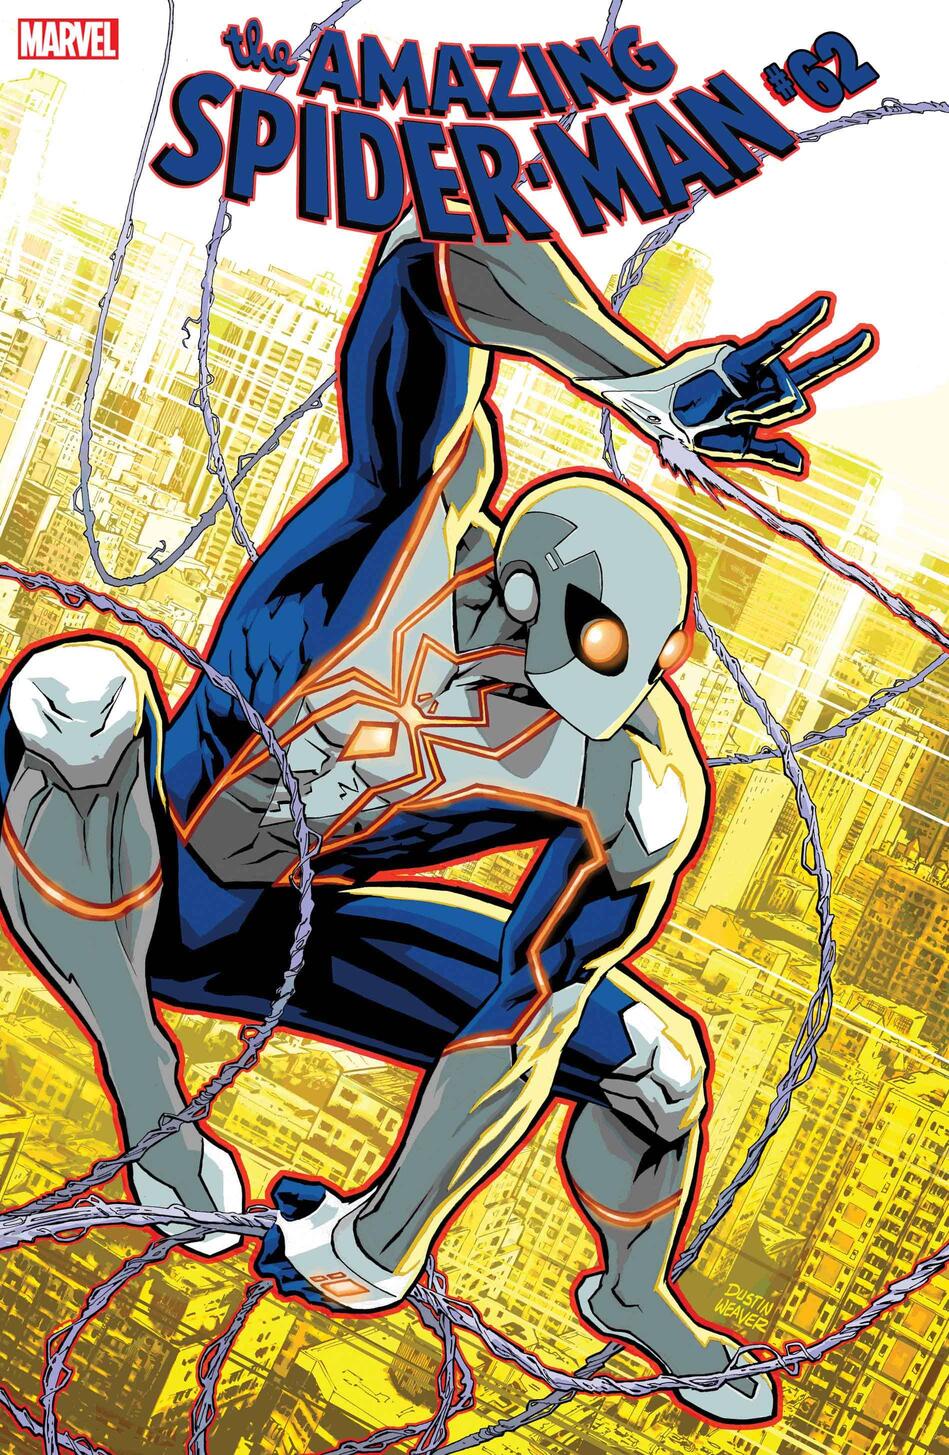 New Spider-Man costume revealed in Amazing Spider-Man #61